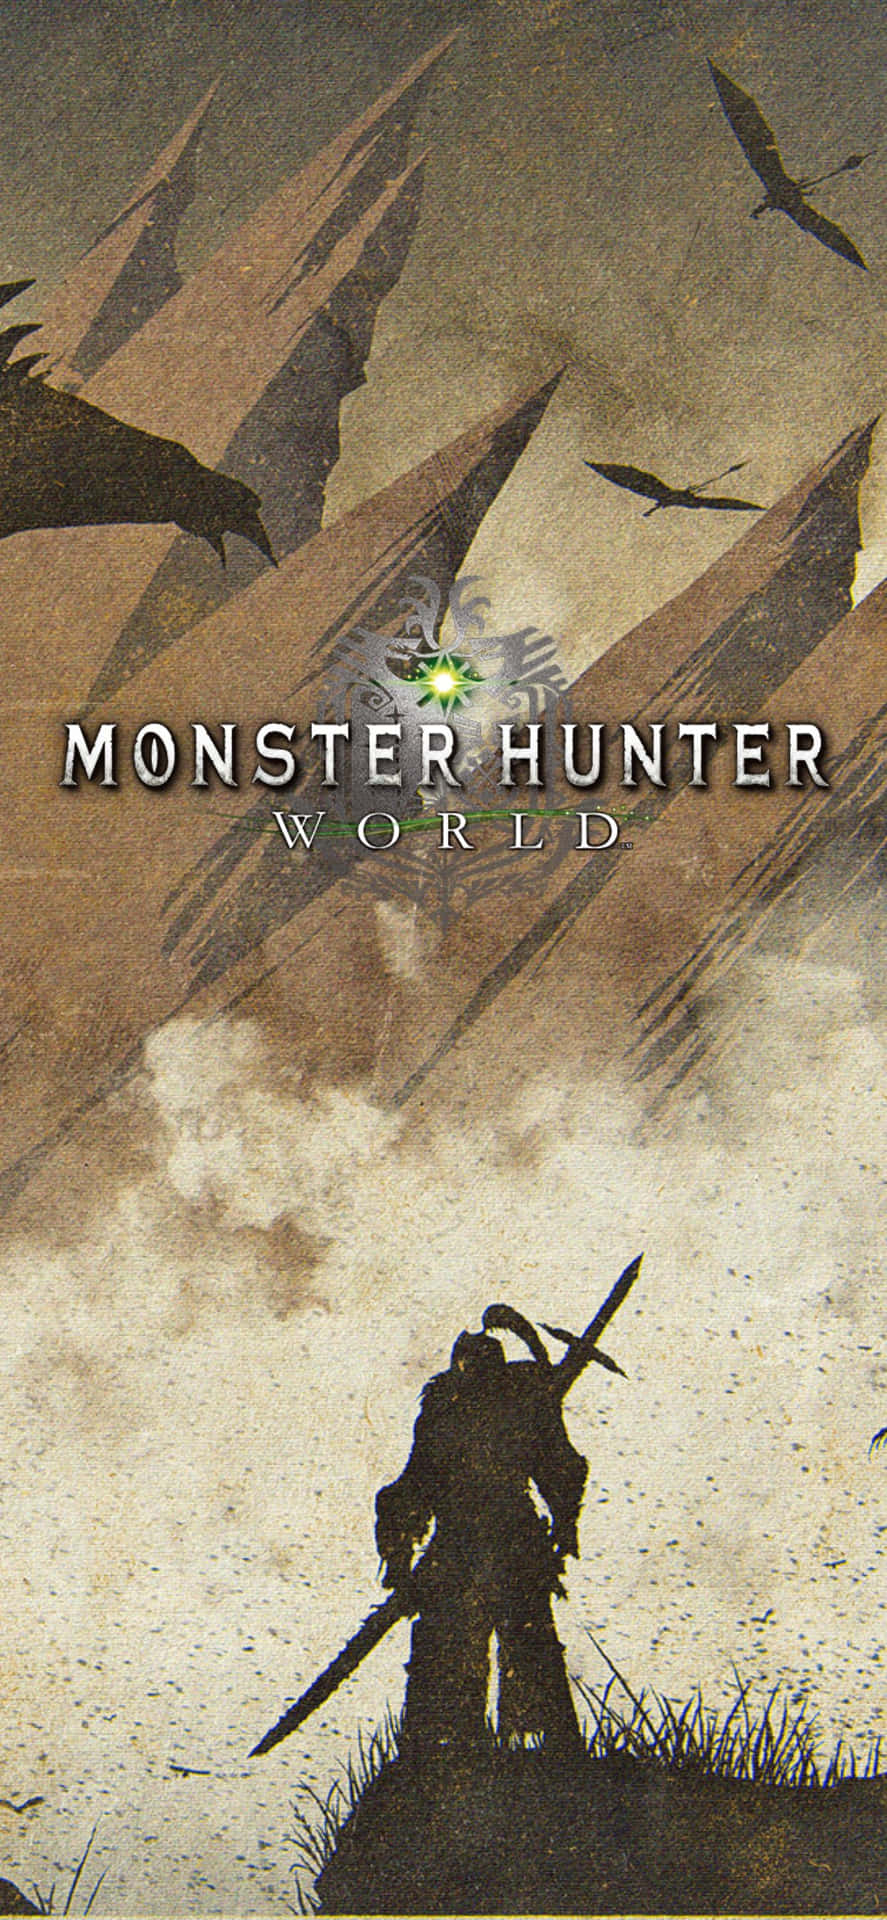 Iphonexs Max Bakgrundsbild Med Silhuett Av Monster Hunter World.